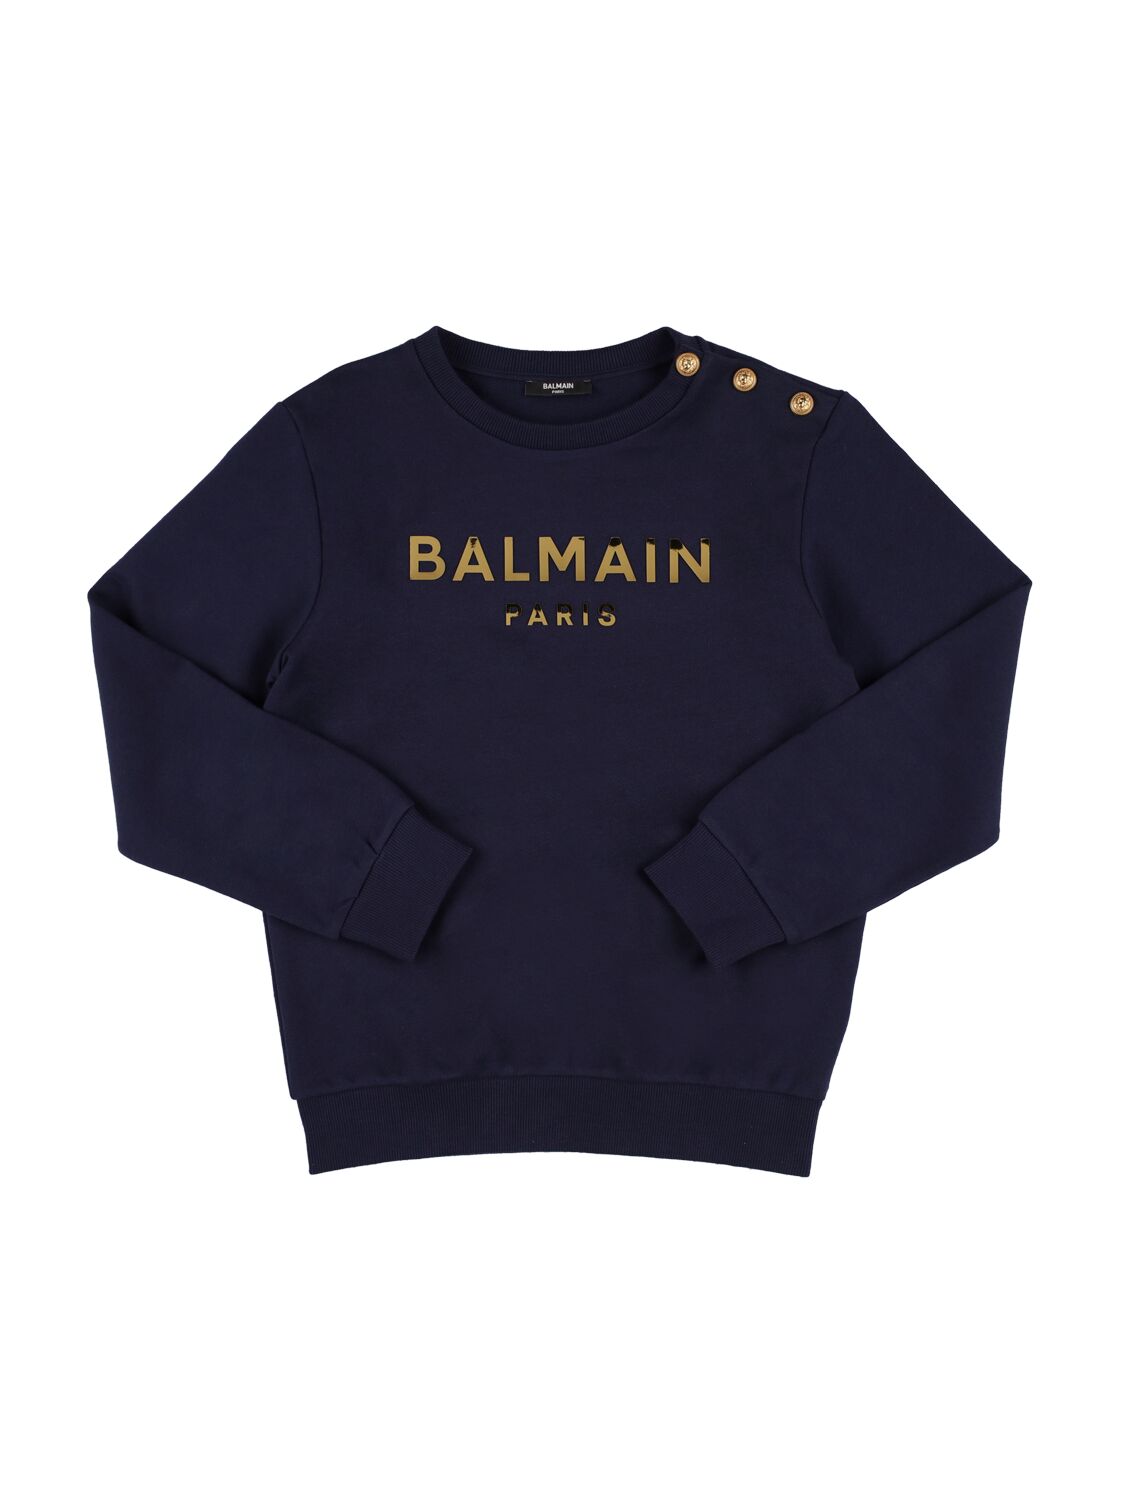 Balmain Kids' Organic Cotton Jersey Sweatshirt In Navy